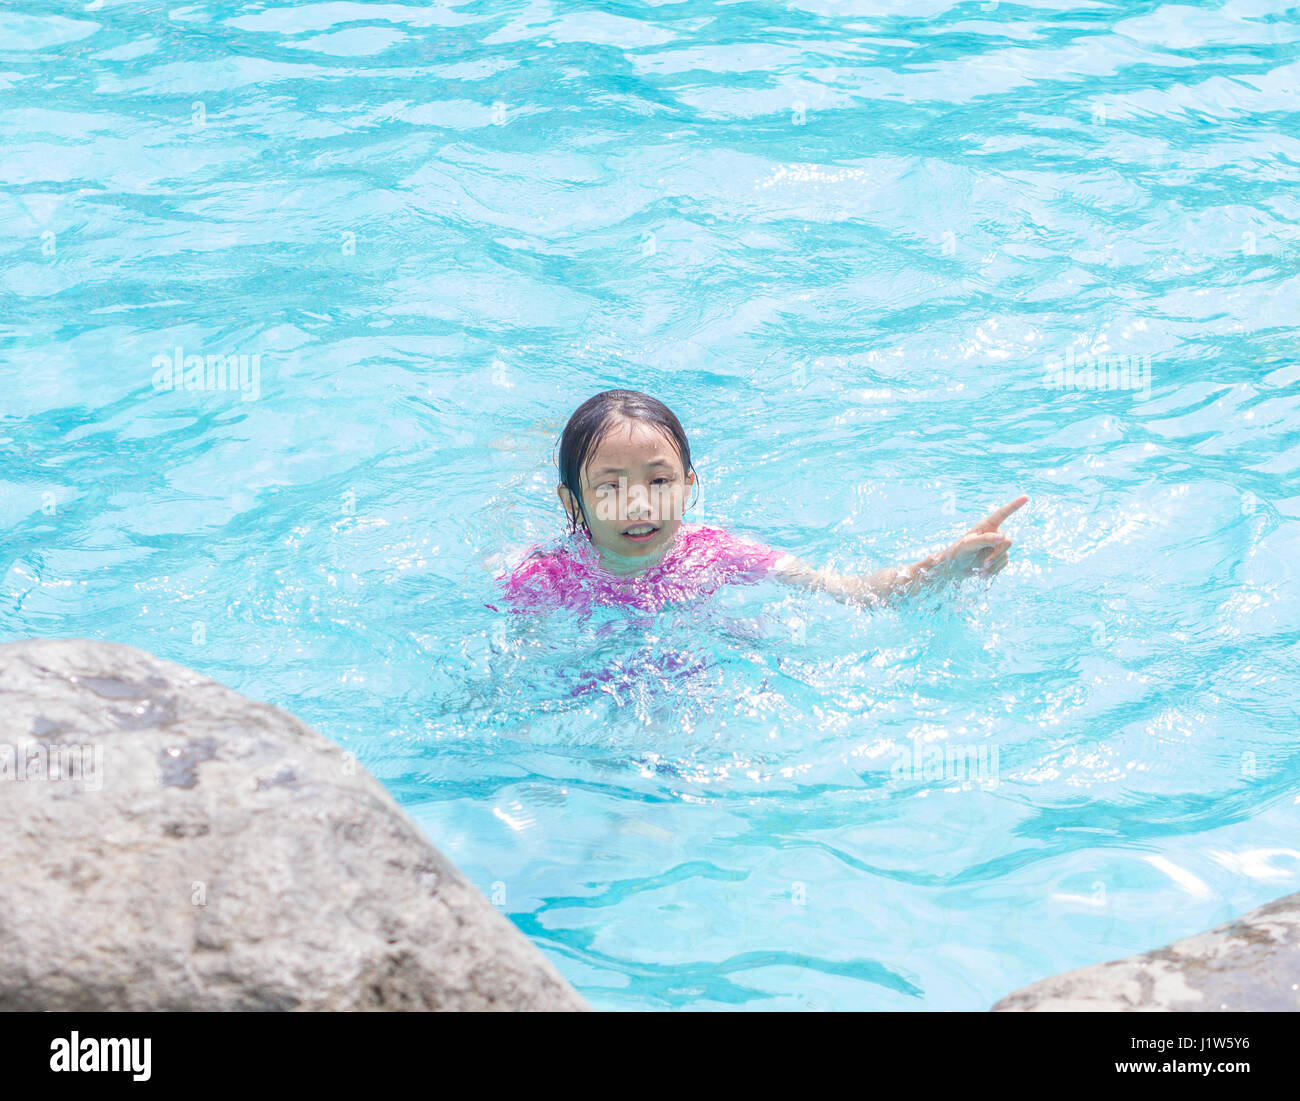 Cabrito asiáticos (niña) en la piscina con finger pointing Foto de stock